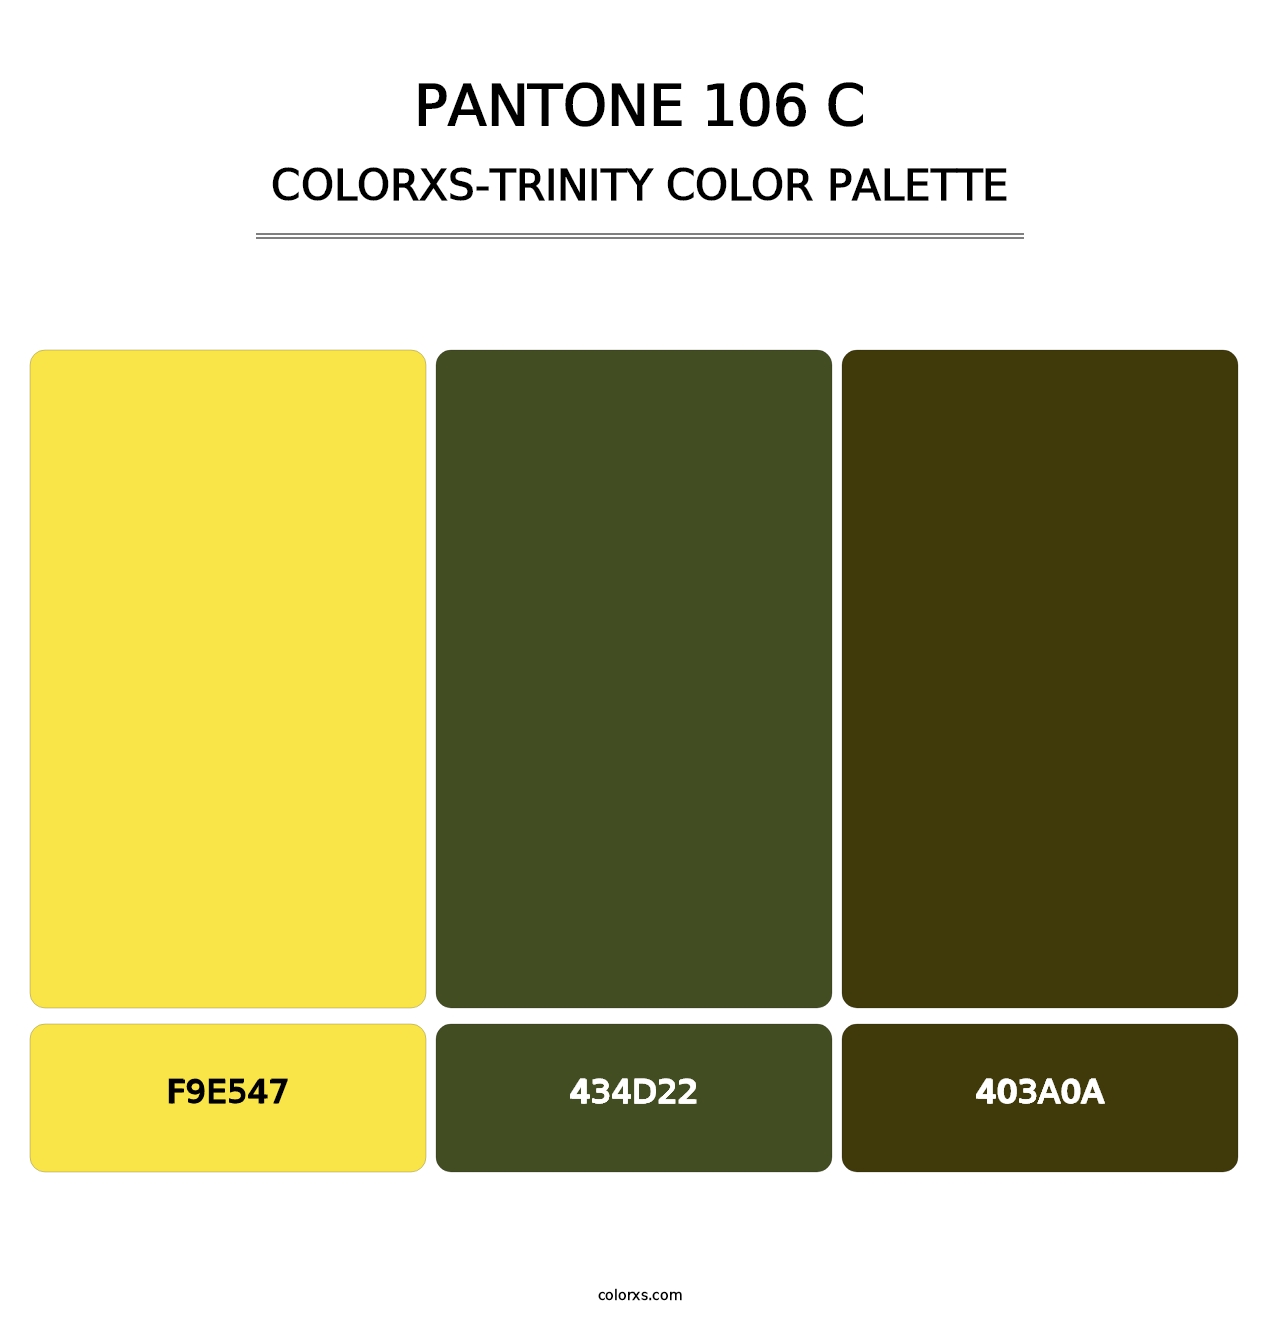 PANTONE 106 C - Colorxs Trinity Palette